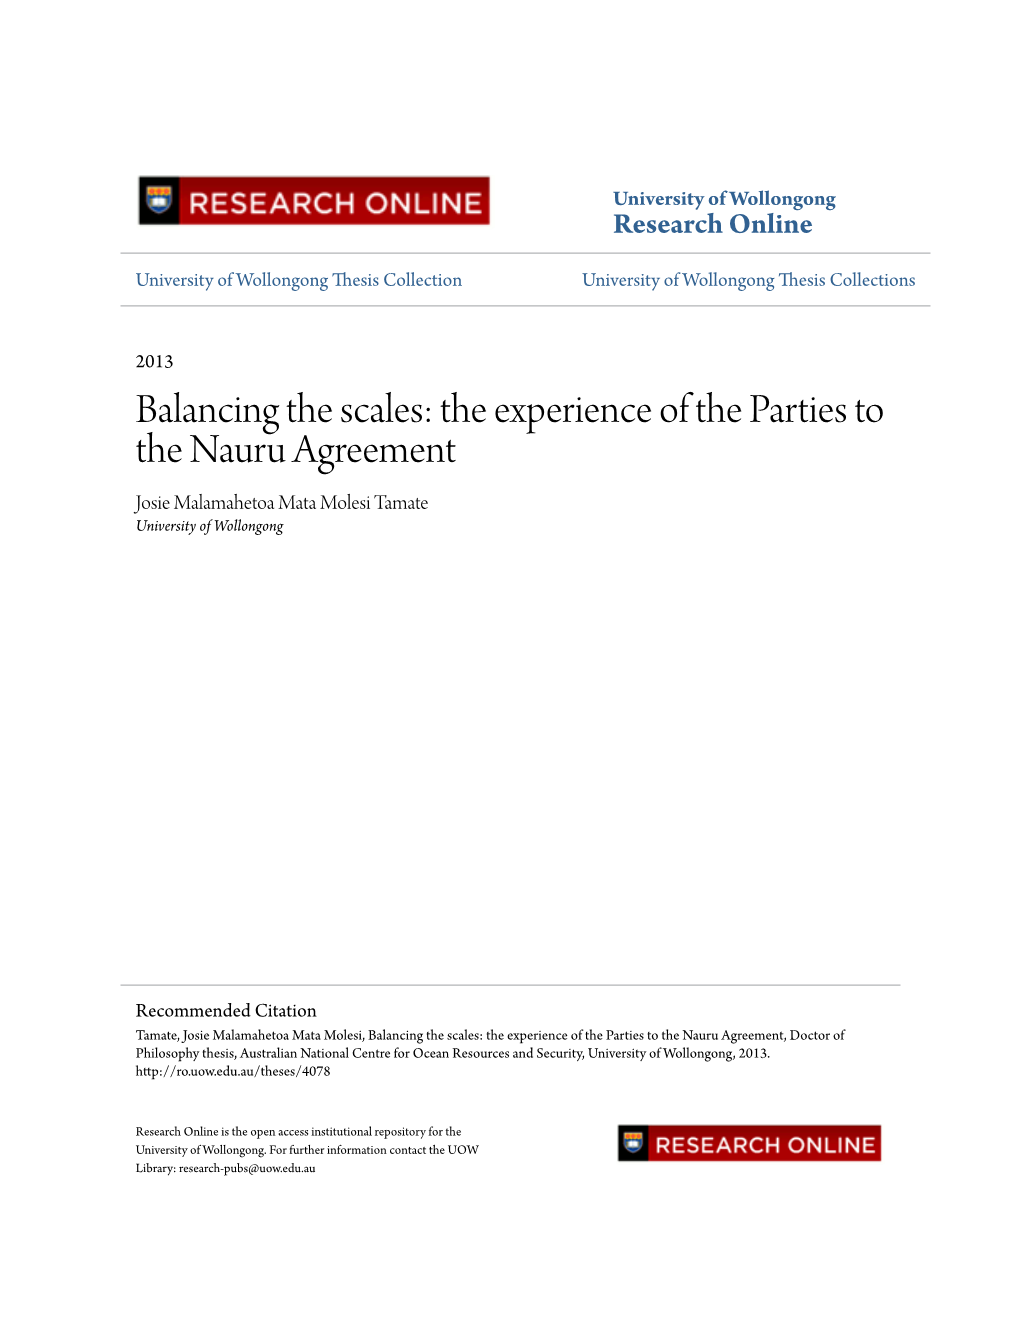 Balancing the Scales: the Experience of the Parties to the Nauru Agreement Josie Malamahetoa Mata Molesi Tamate University of Wollongong